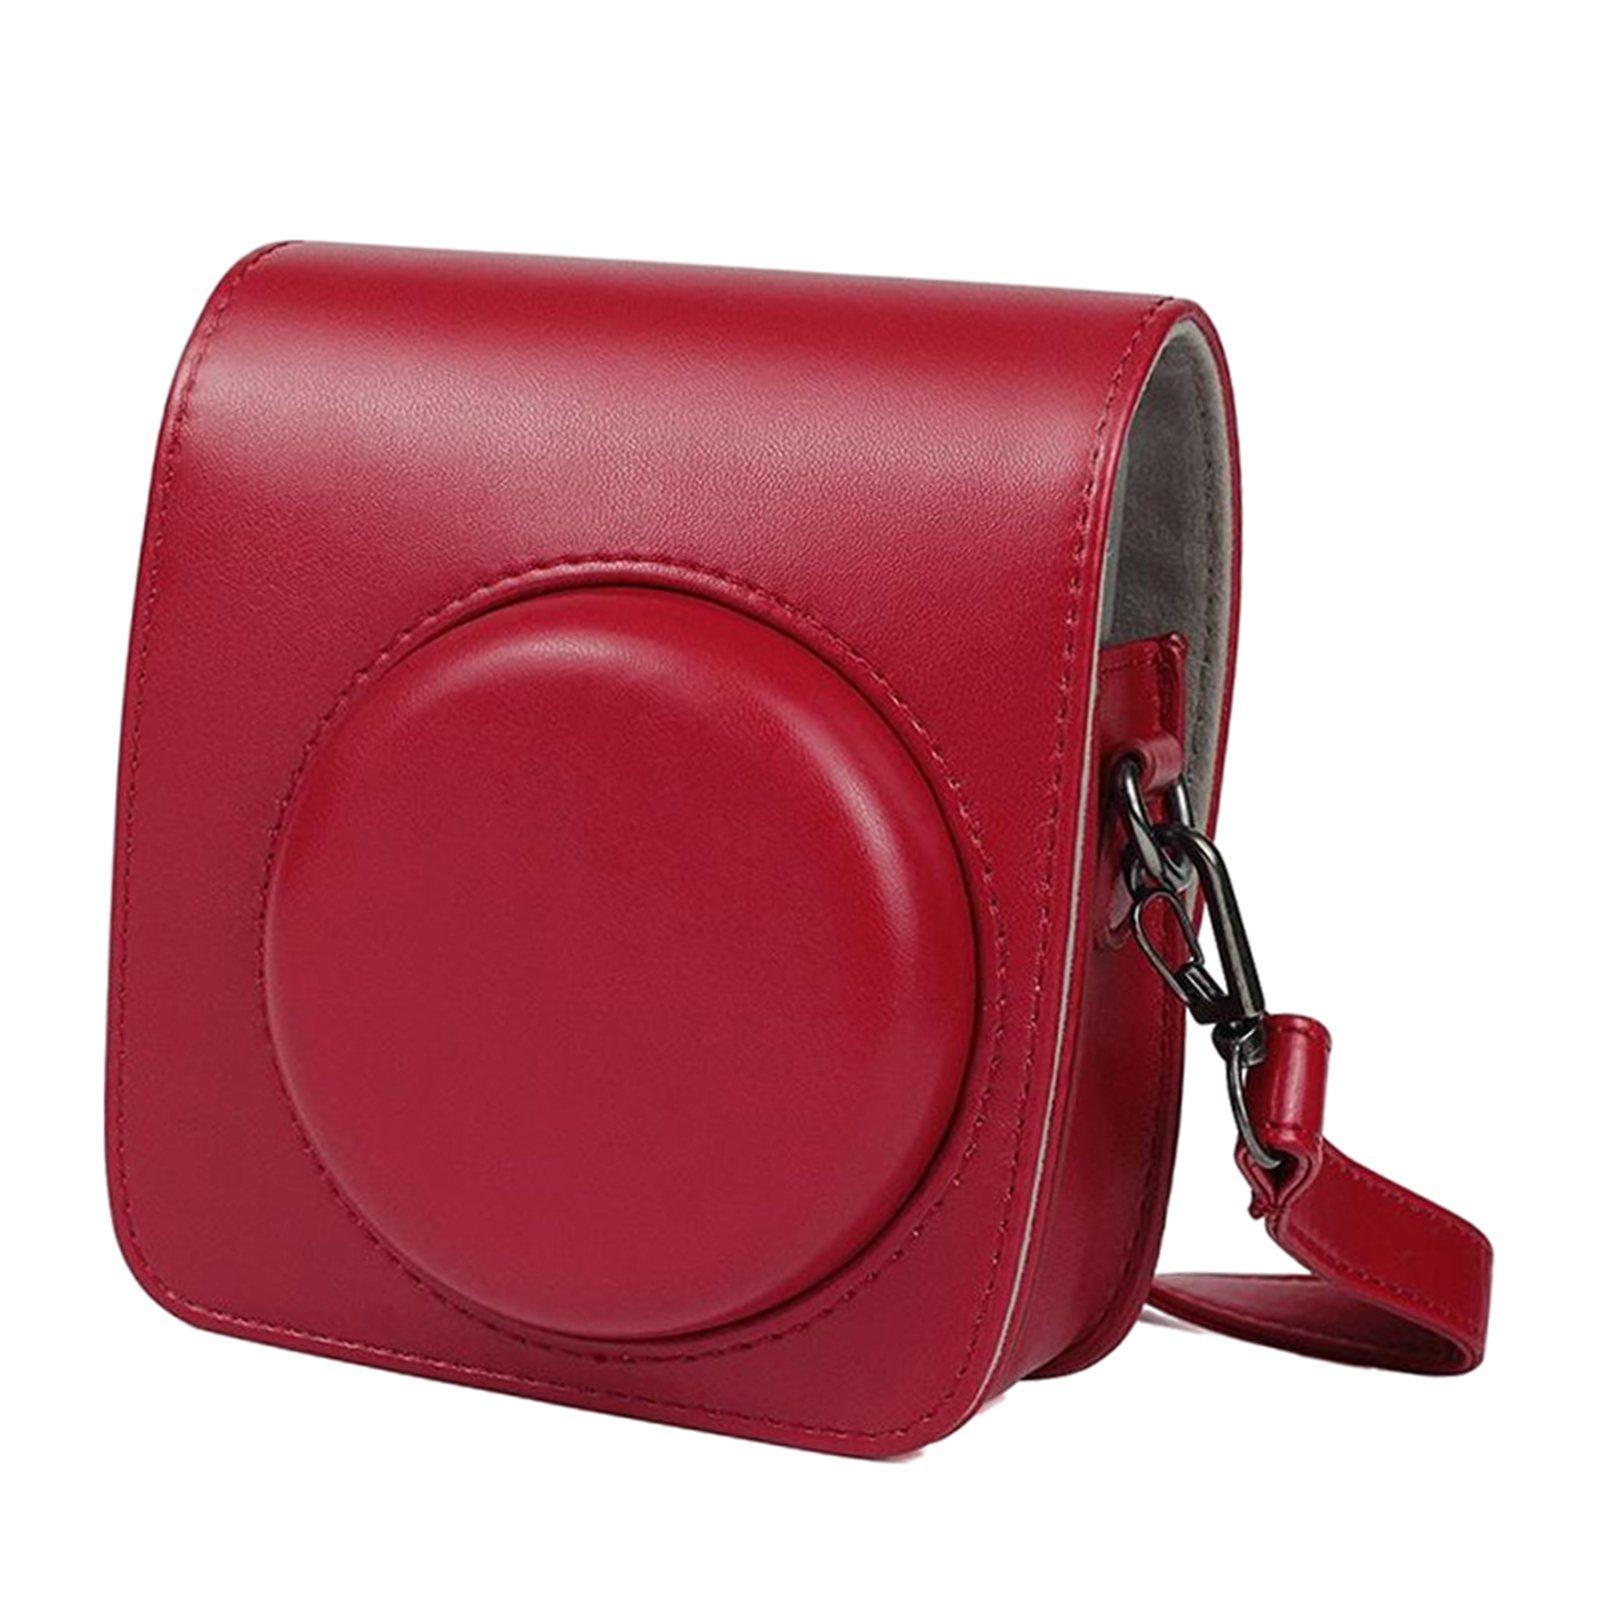 Gazechimp Retro Camera Protective Case, for Mini 90, Classic PU Leather Cover,